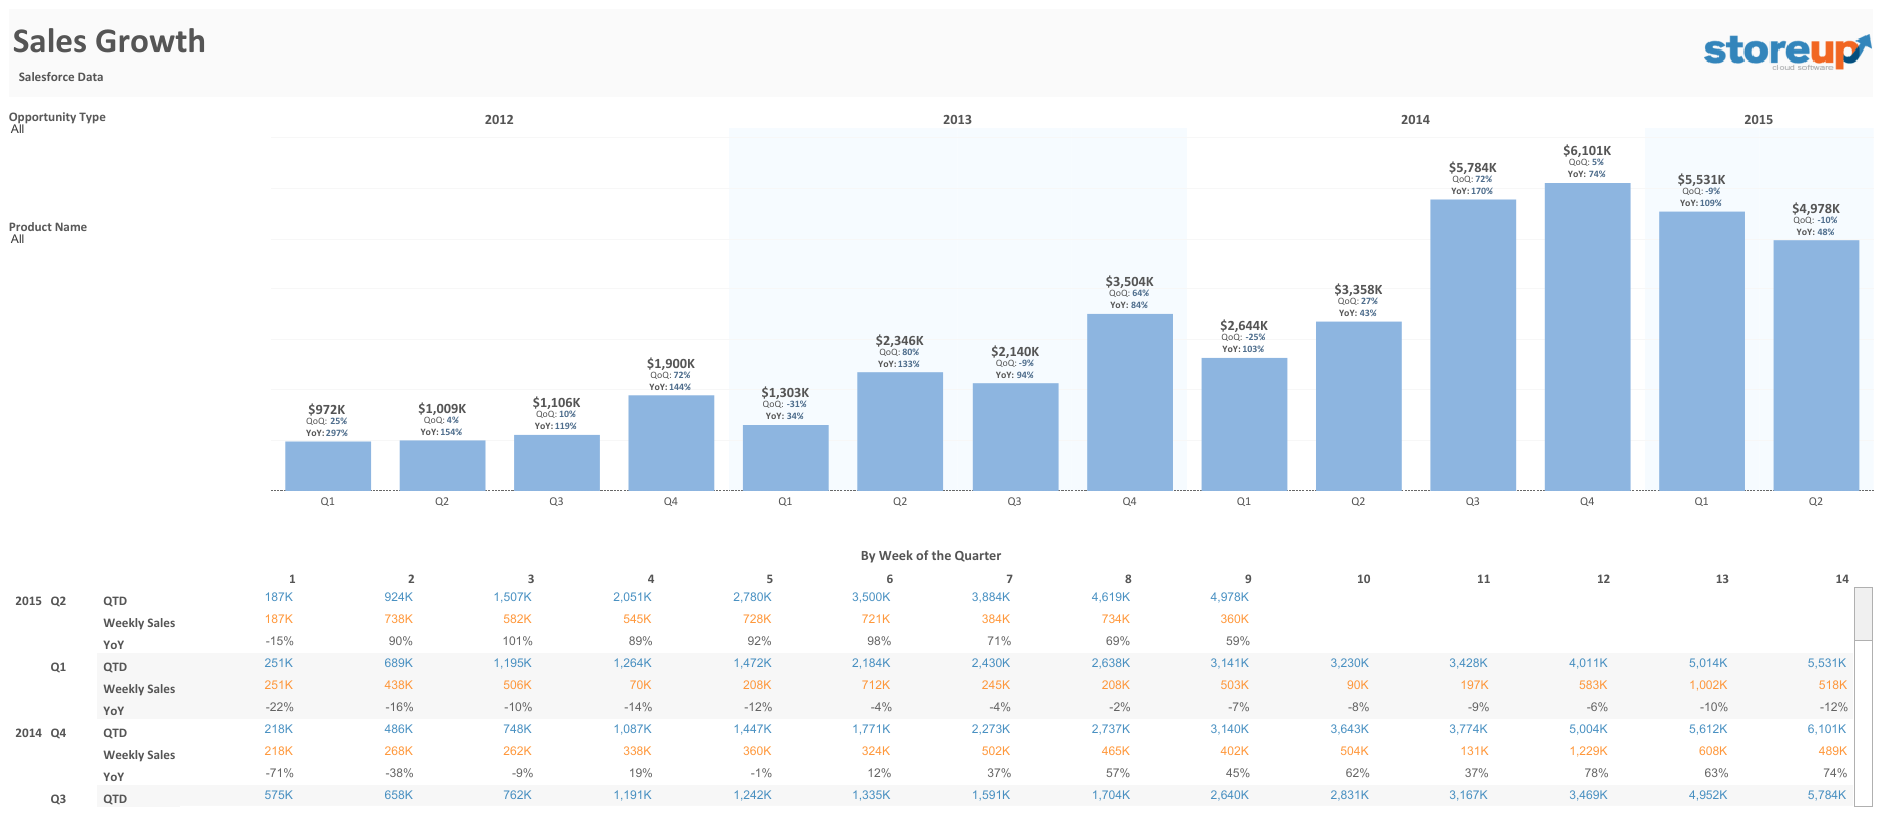 Sales KPI Dashboard: Sales Growth by Quarter